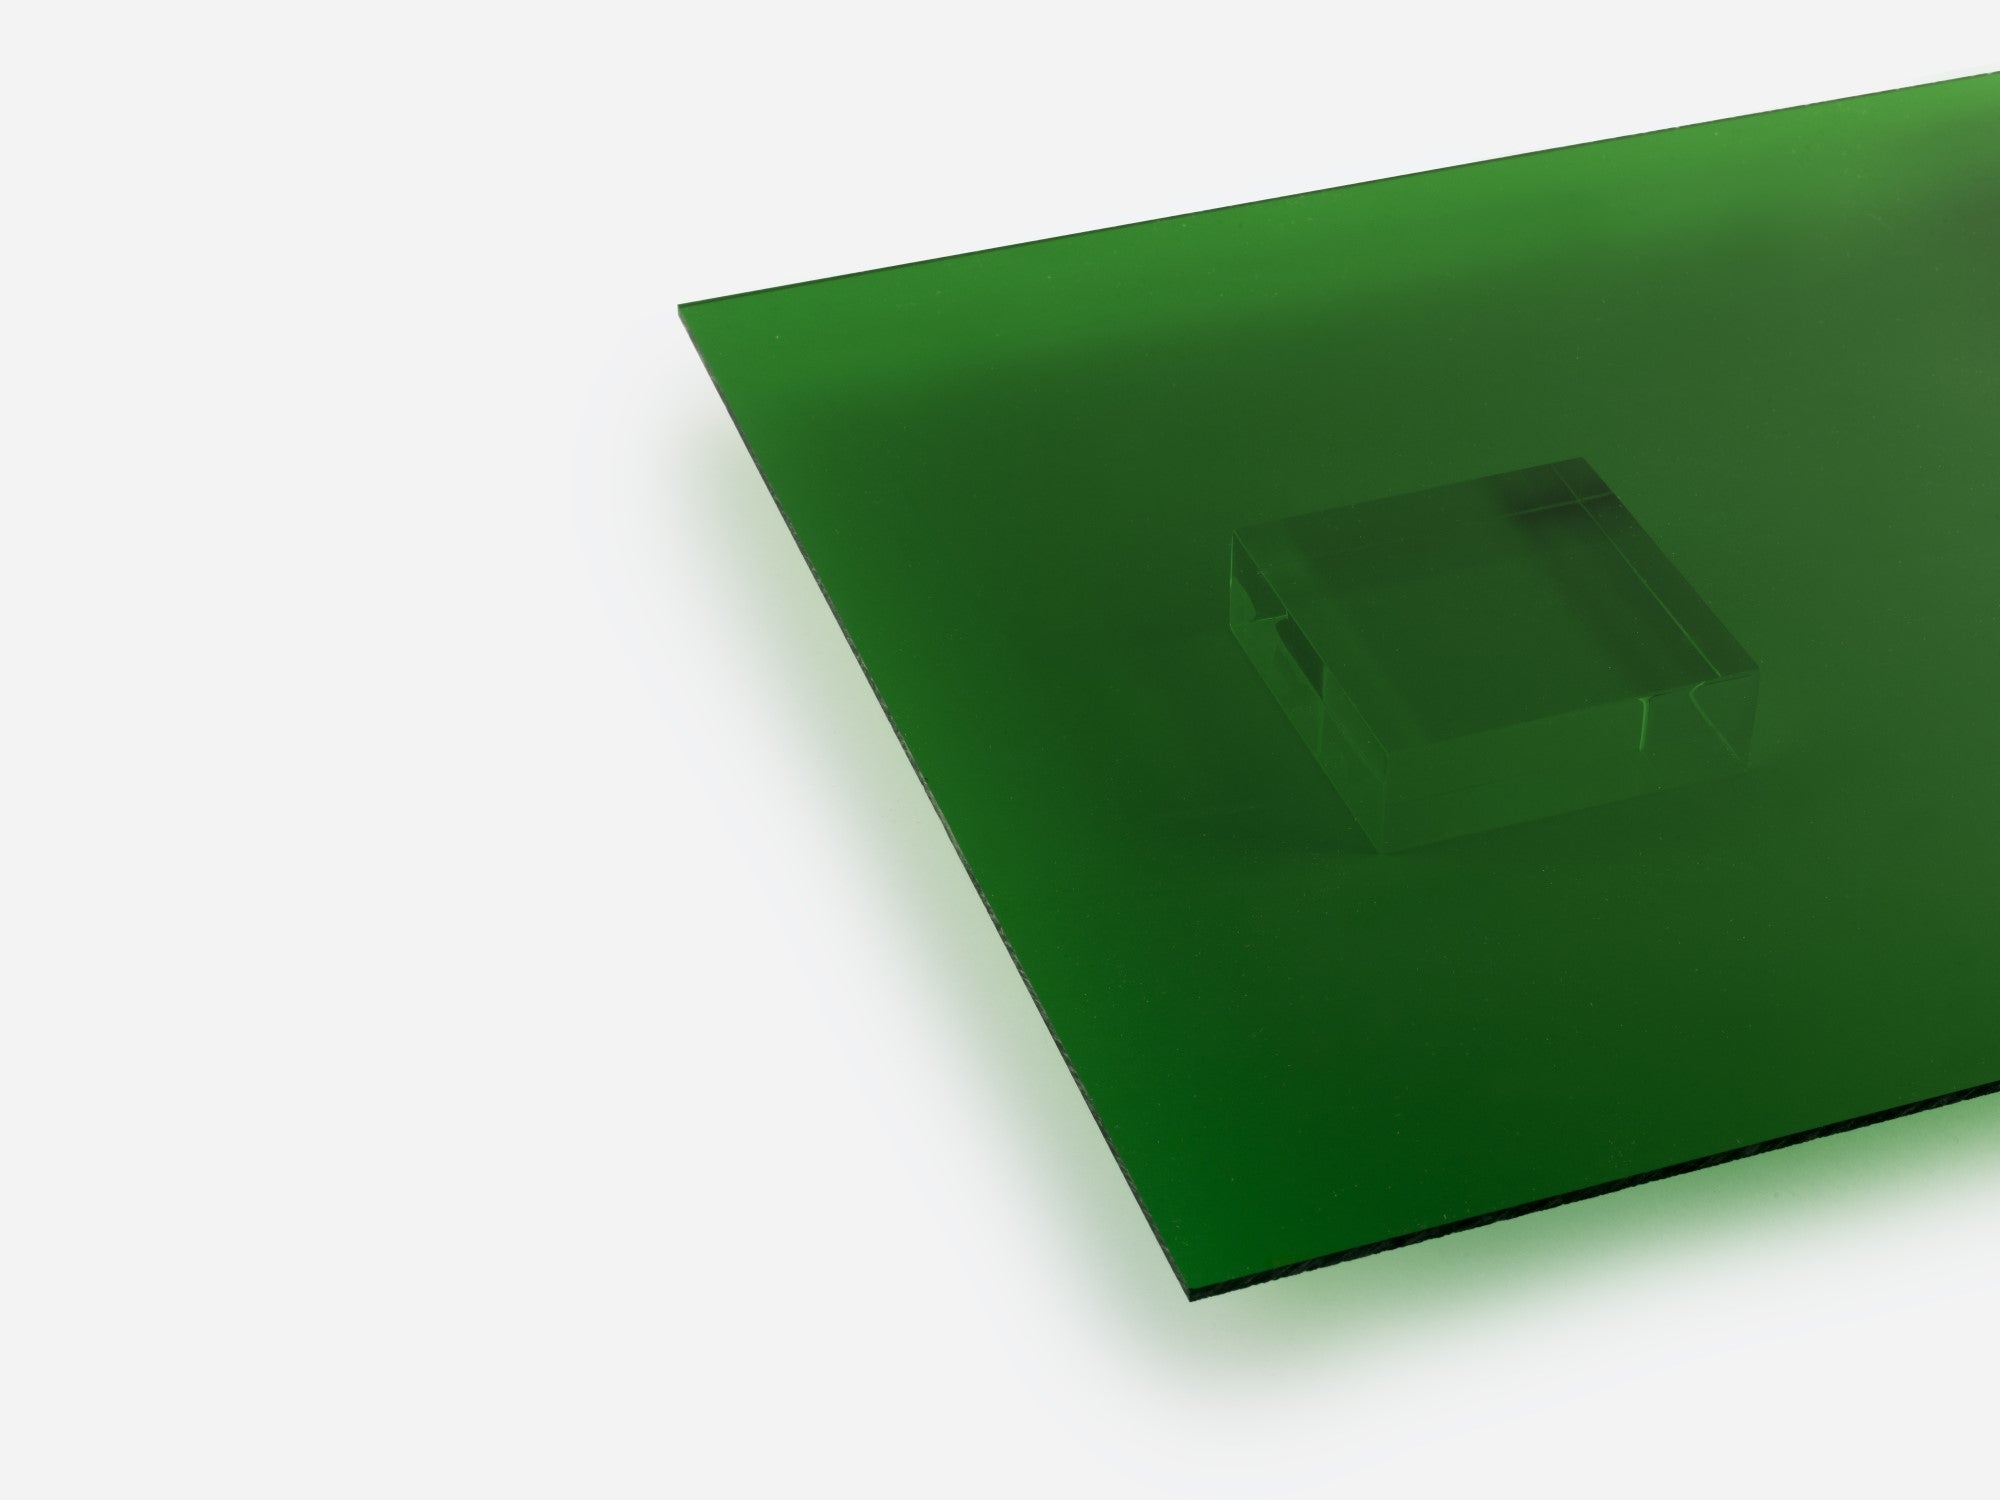 Jet Plastics T Shape Clear Acrylic with Green Trim Divider - 30W x 5H